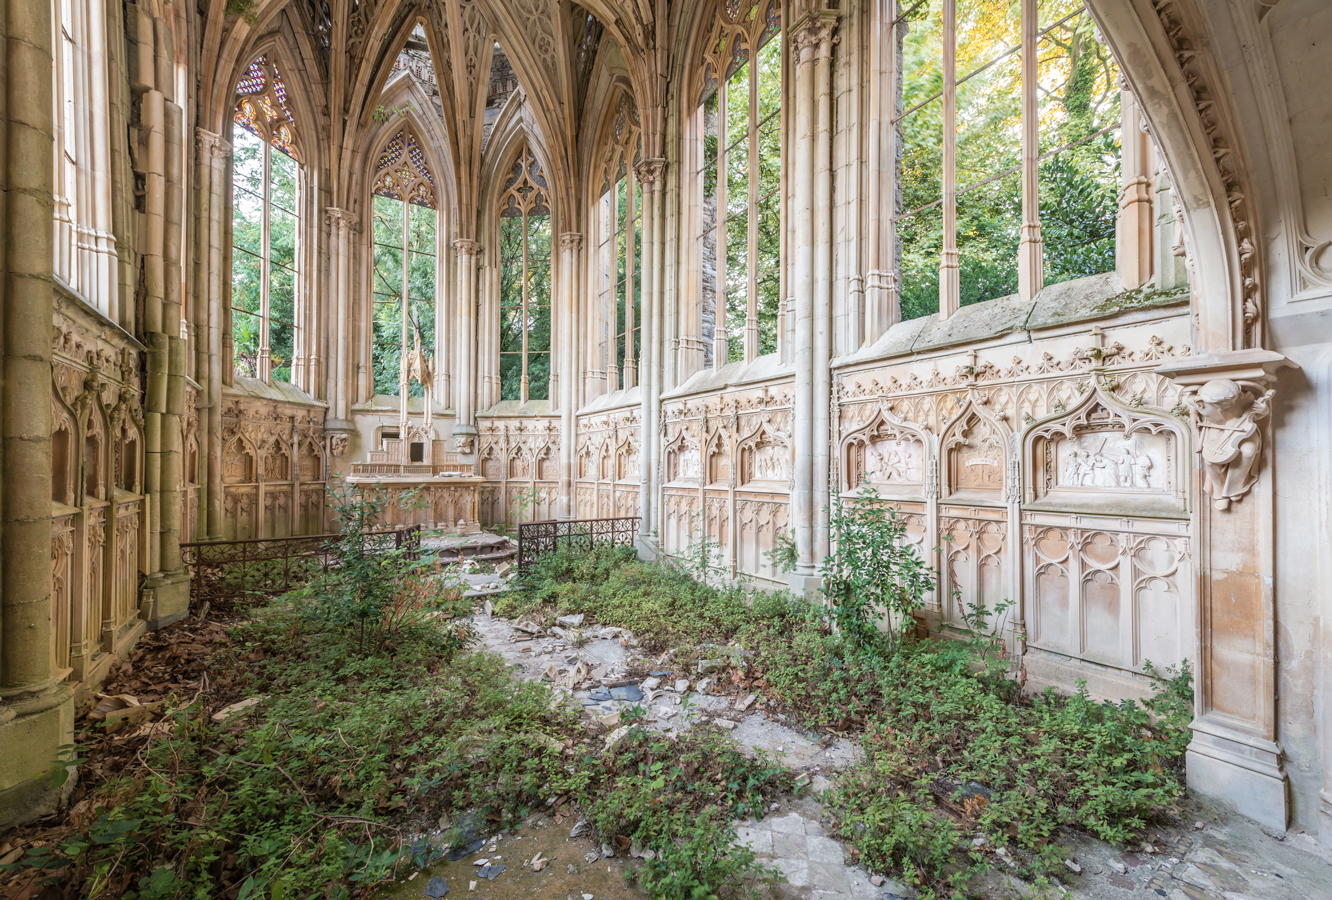 Photographer: Romain Veillon & Abandoned Spaces Around the World